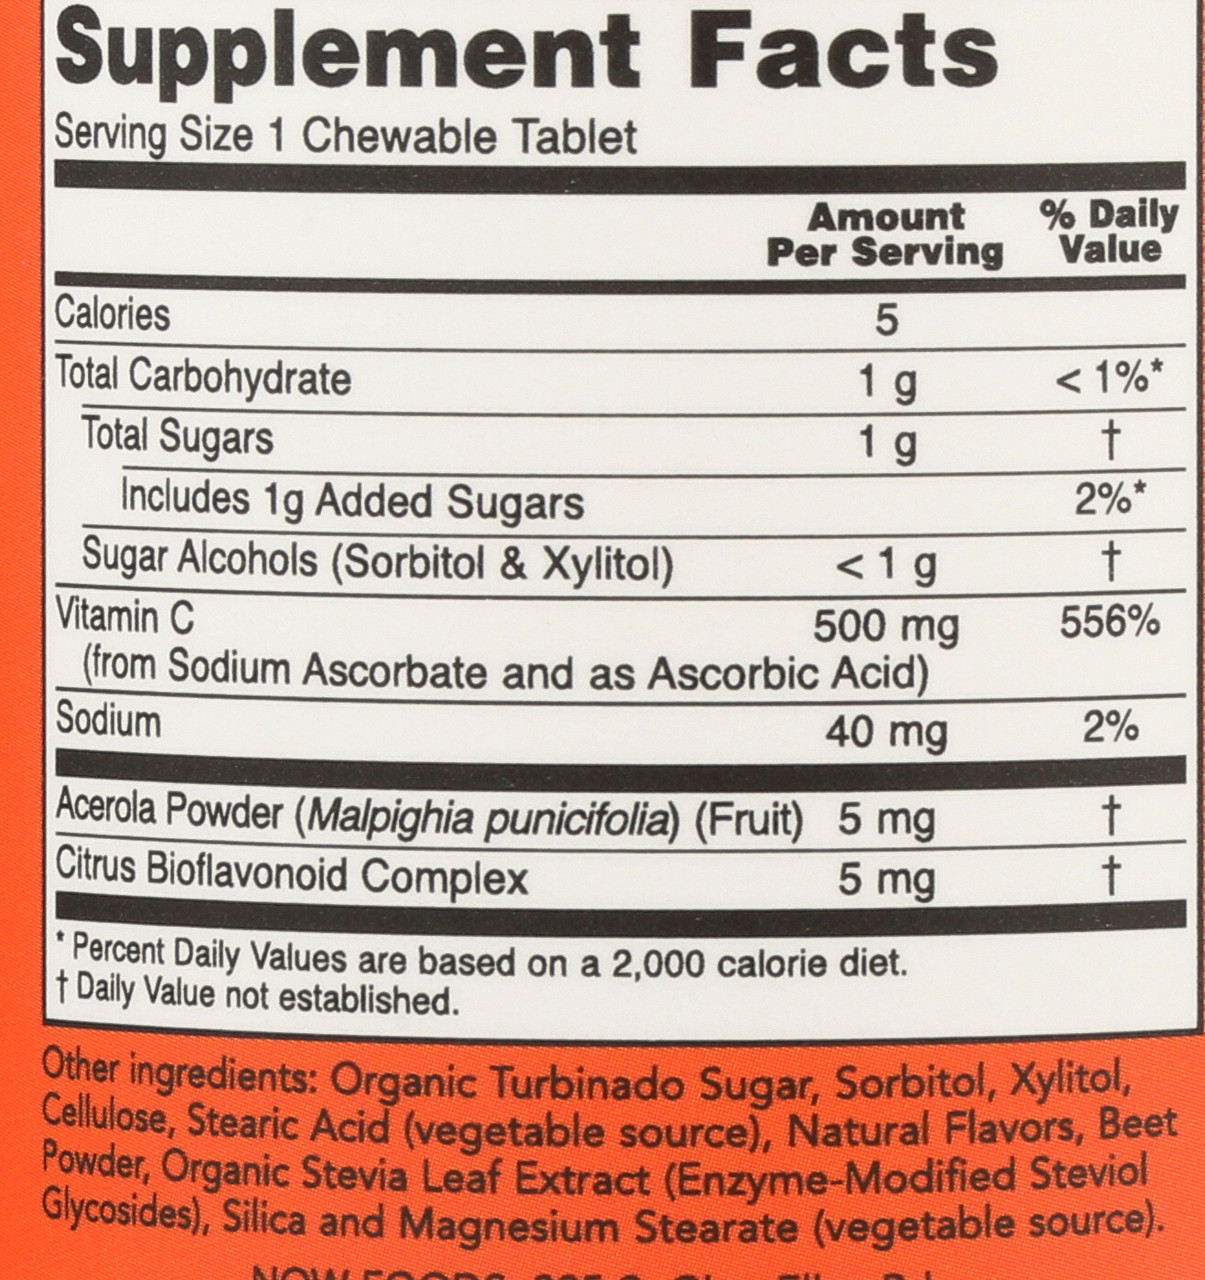 Vitamin C-500 Cherry Chewable - 100 Lozenges